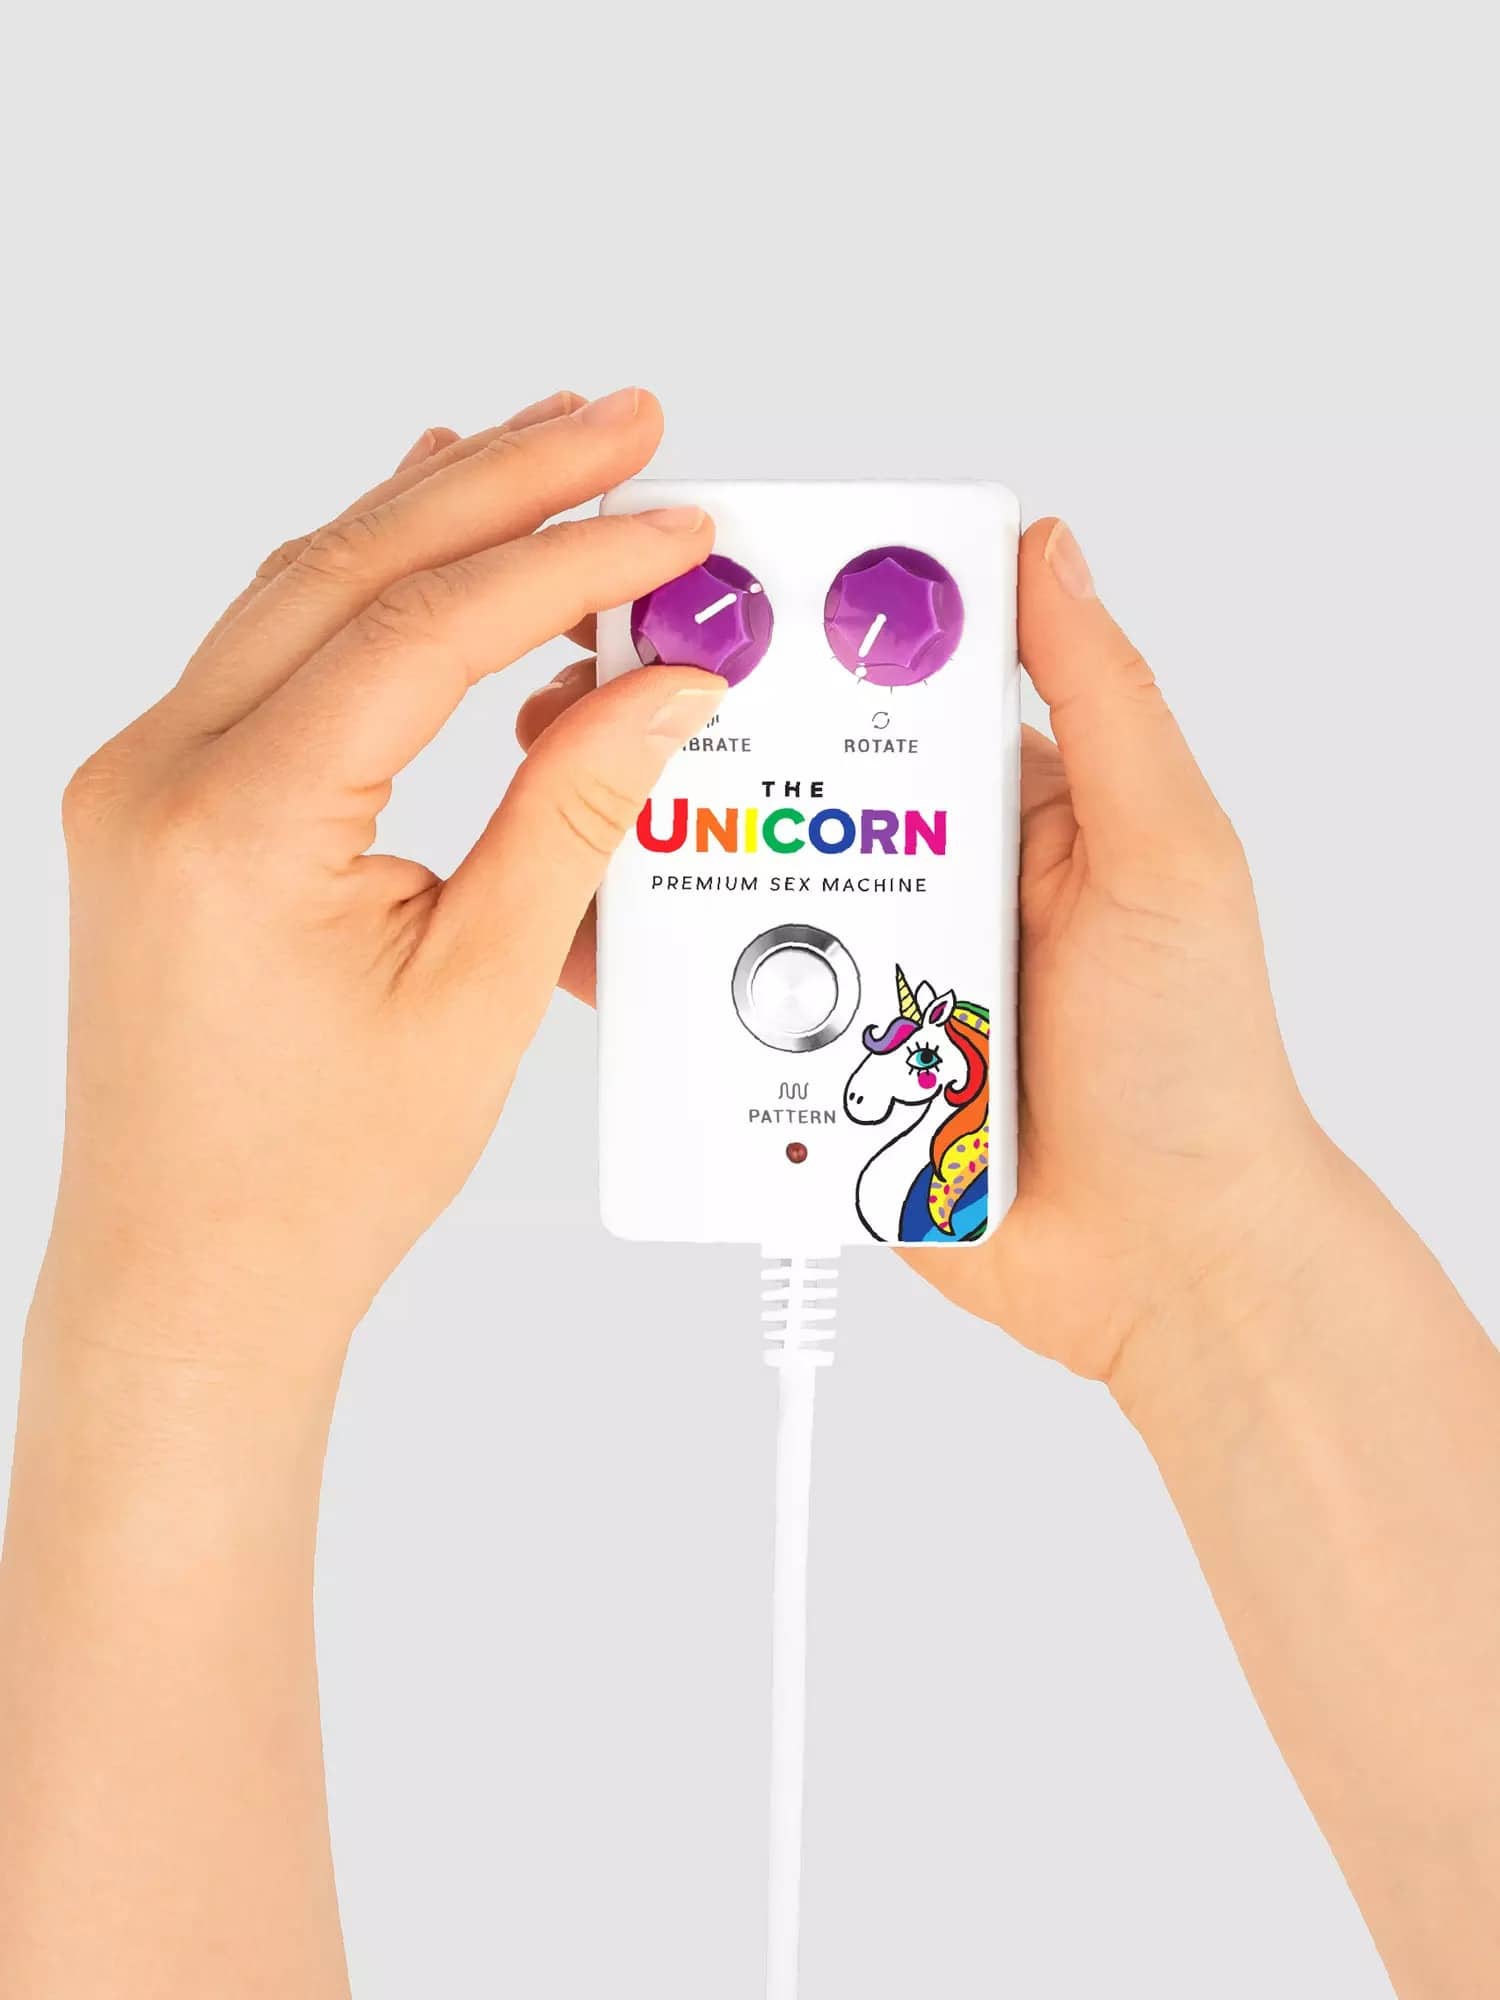 The Unicorn Limited Edition Sex Machine. Slide 15